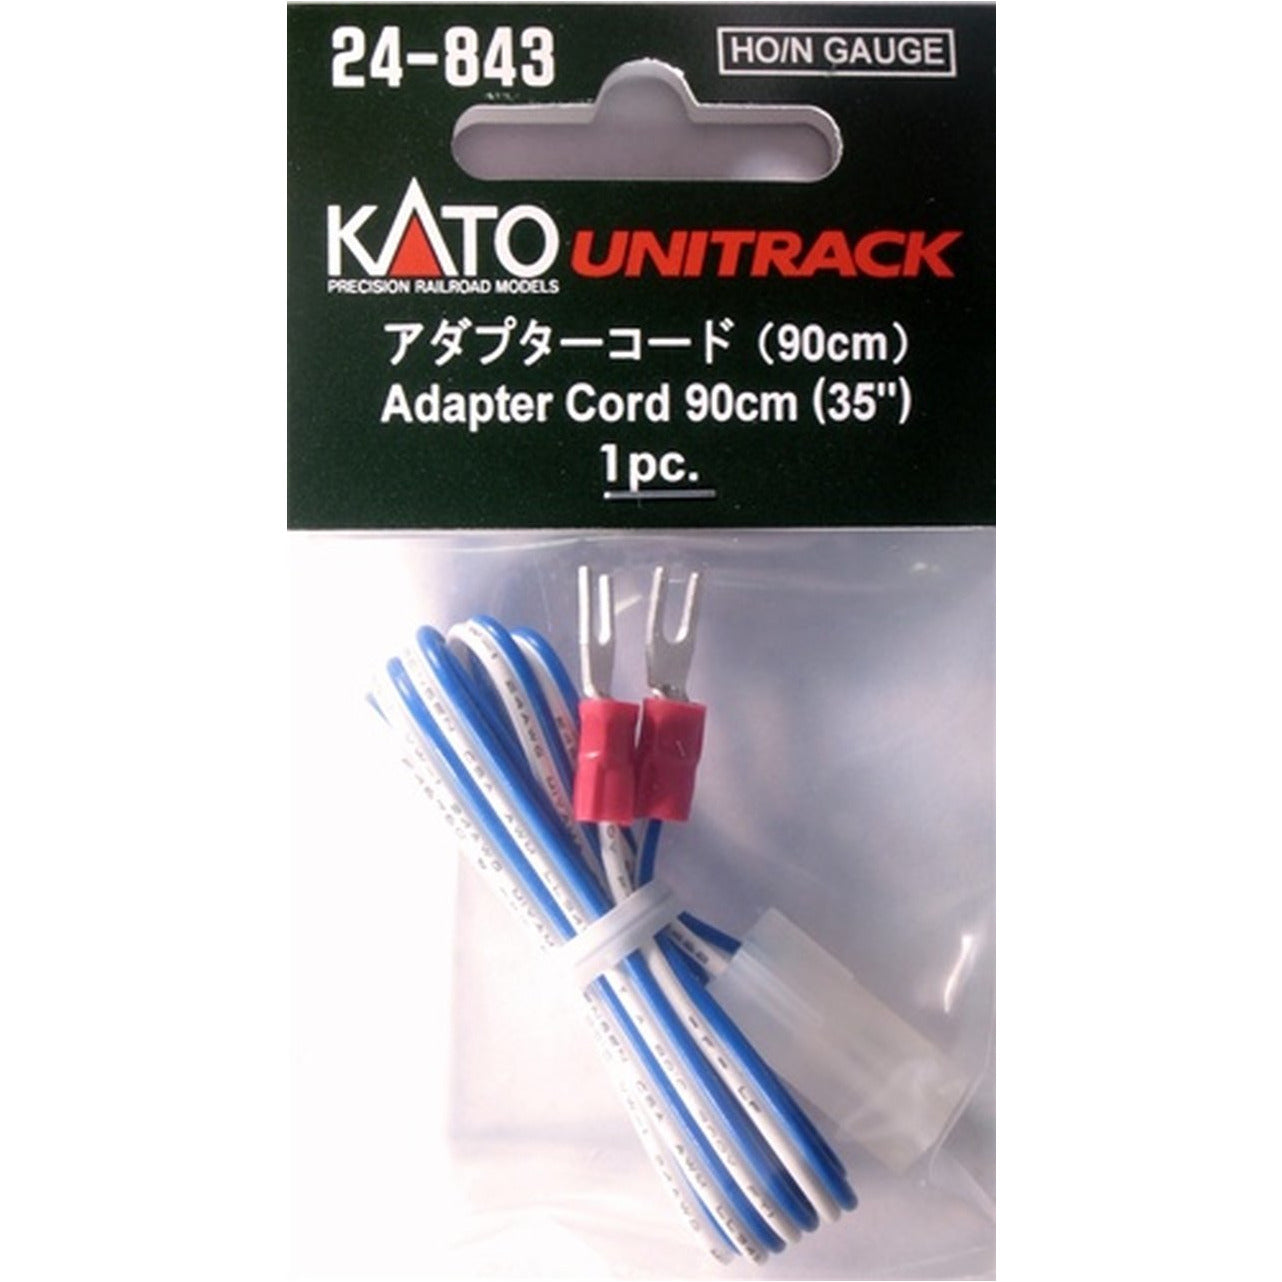 KATO HO/N Unitrack Adapter Cord 90cm (1)